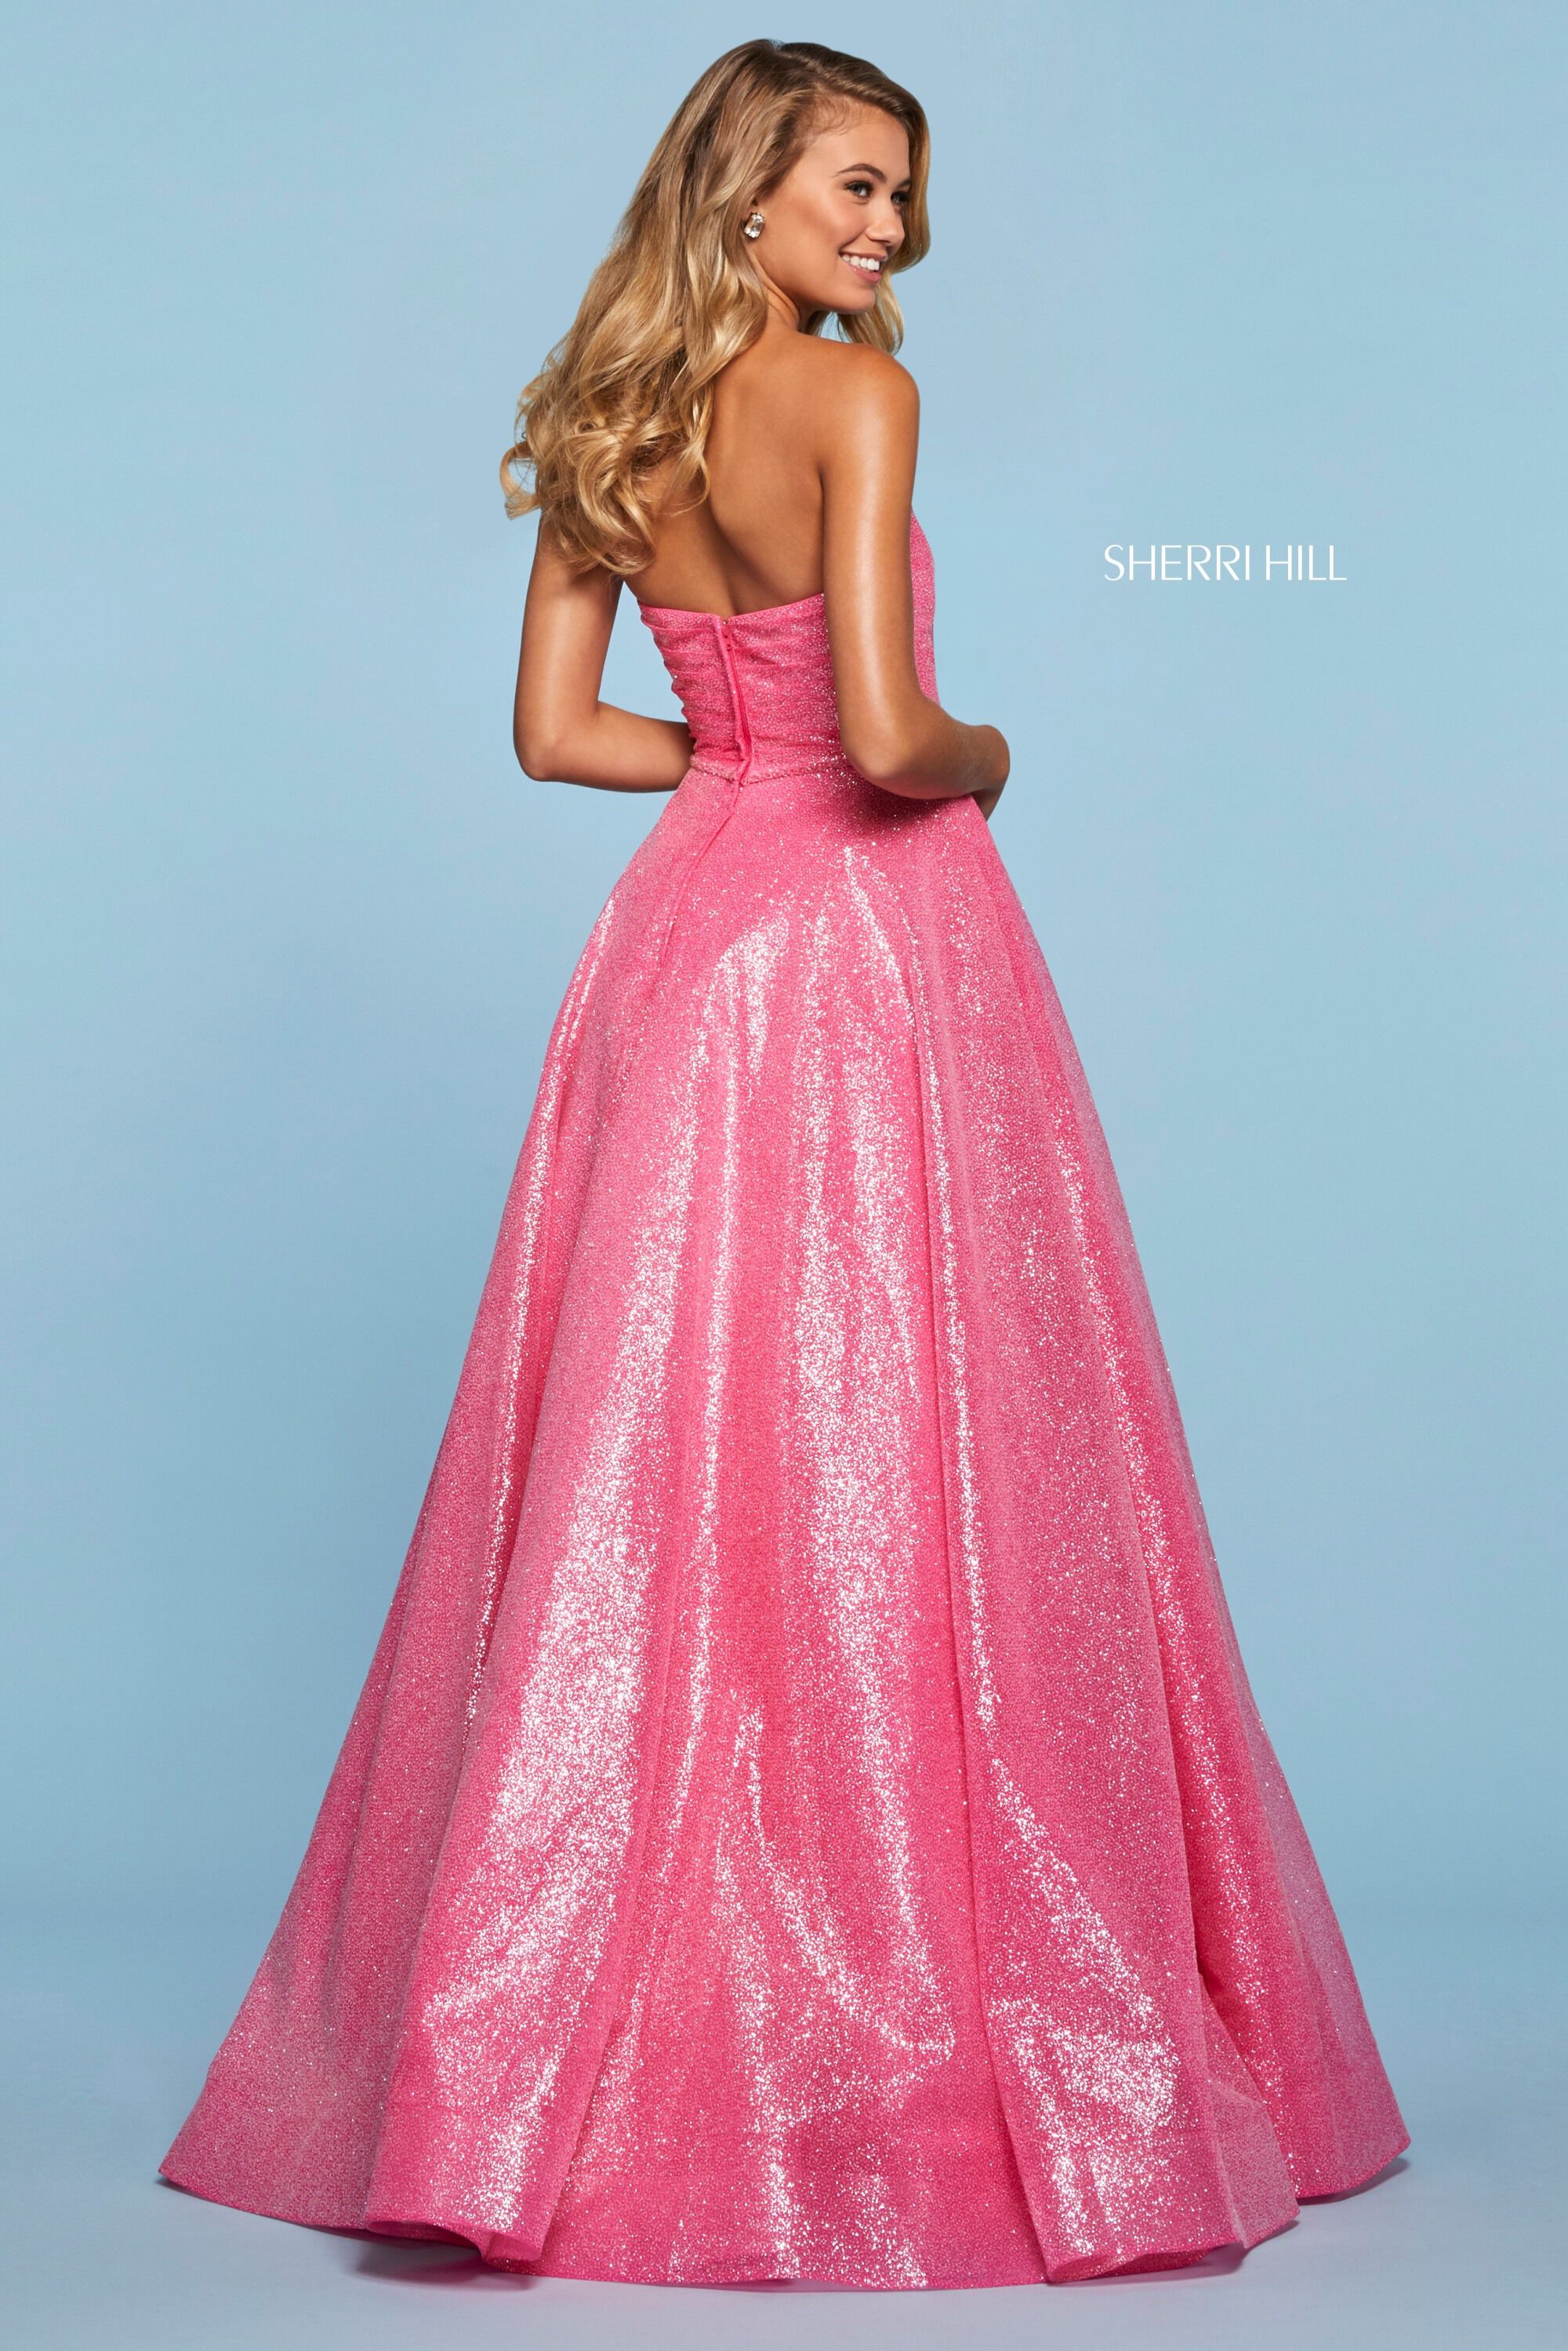 sherri hill pink ball gown